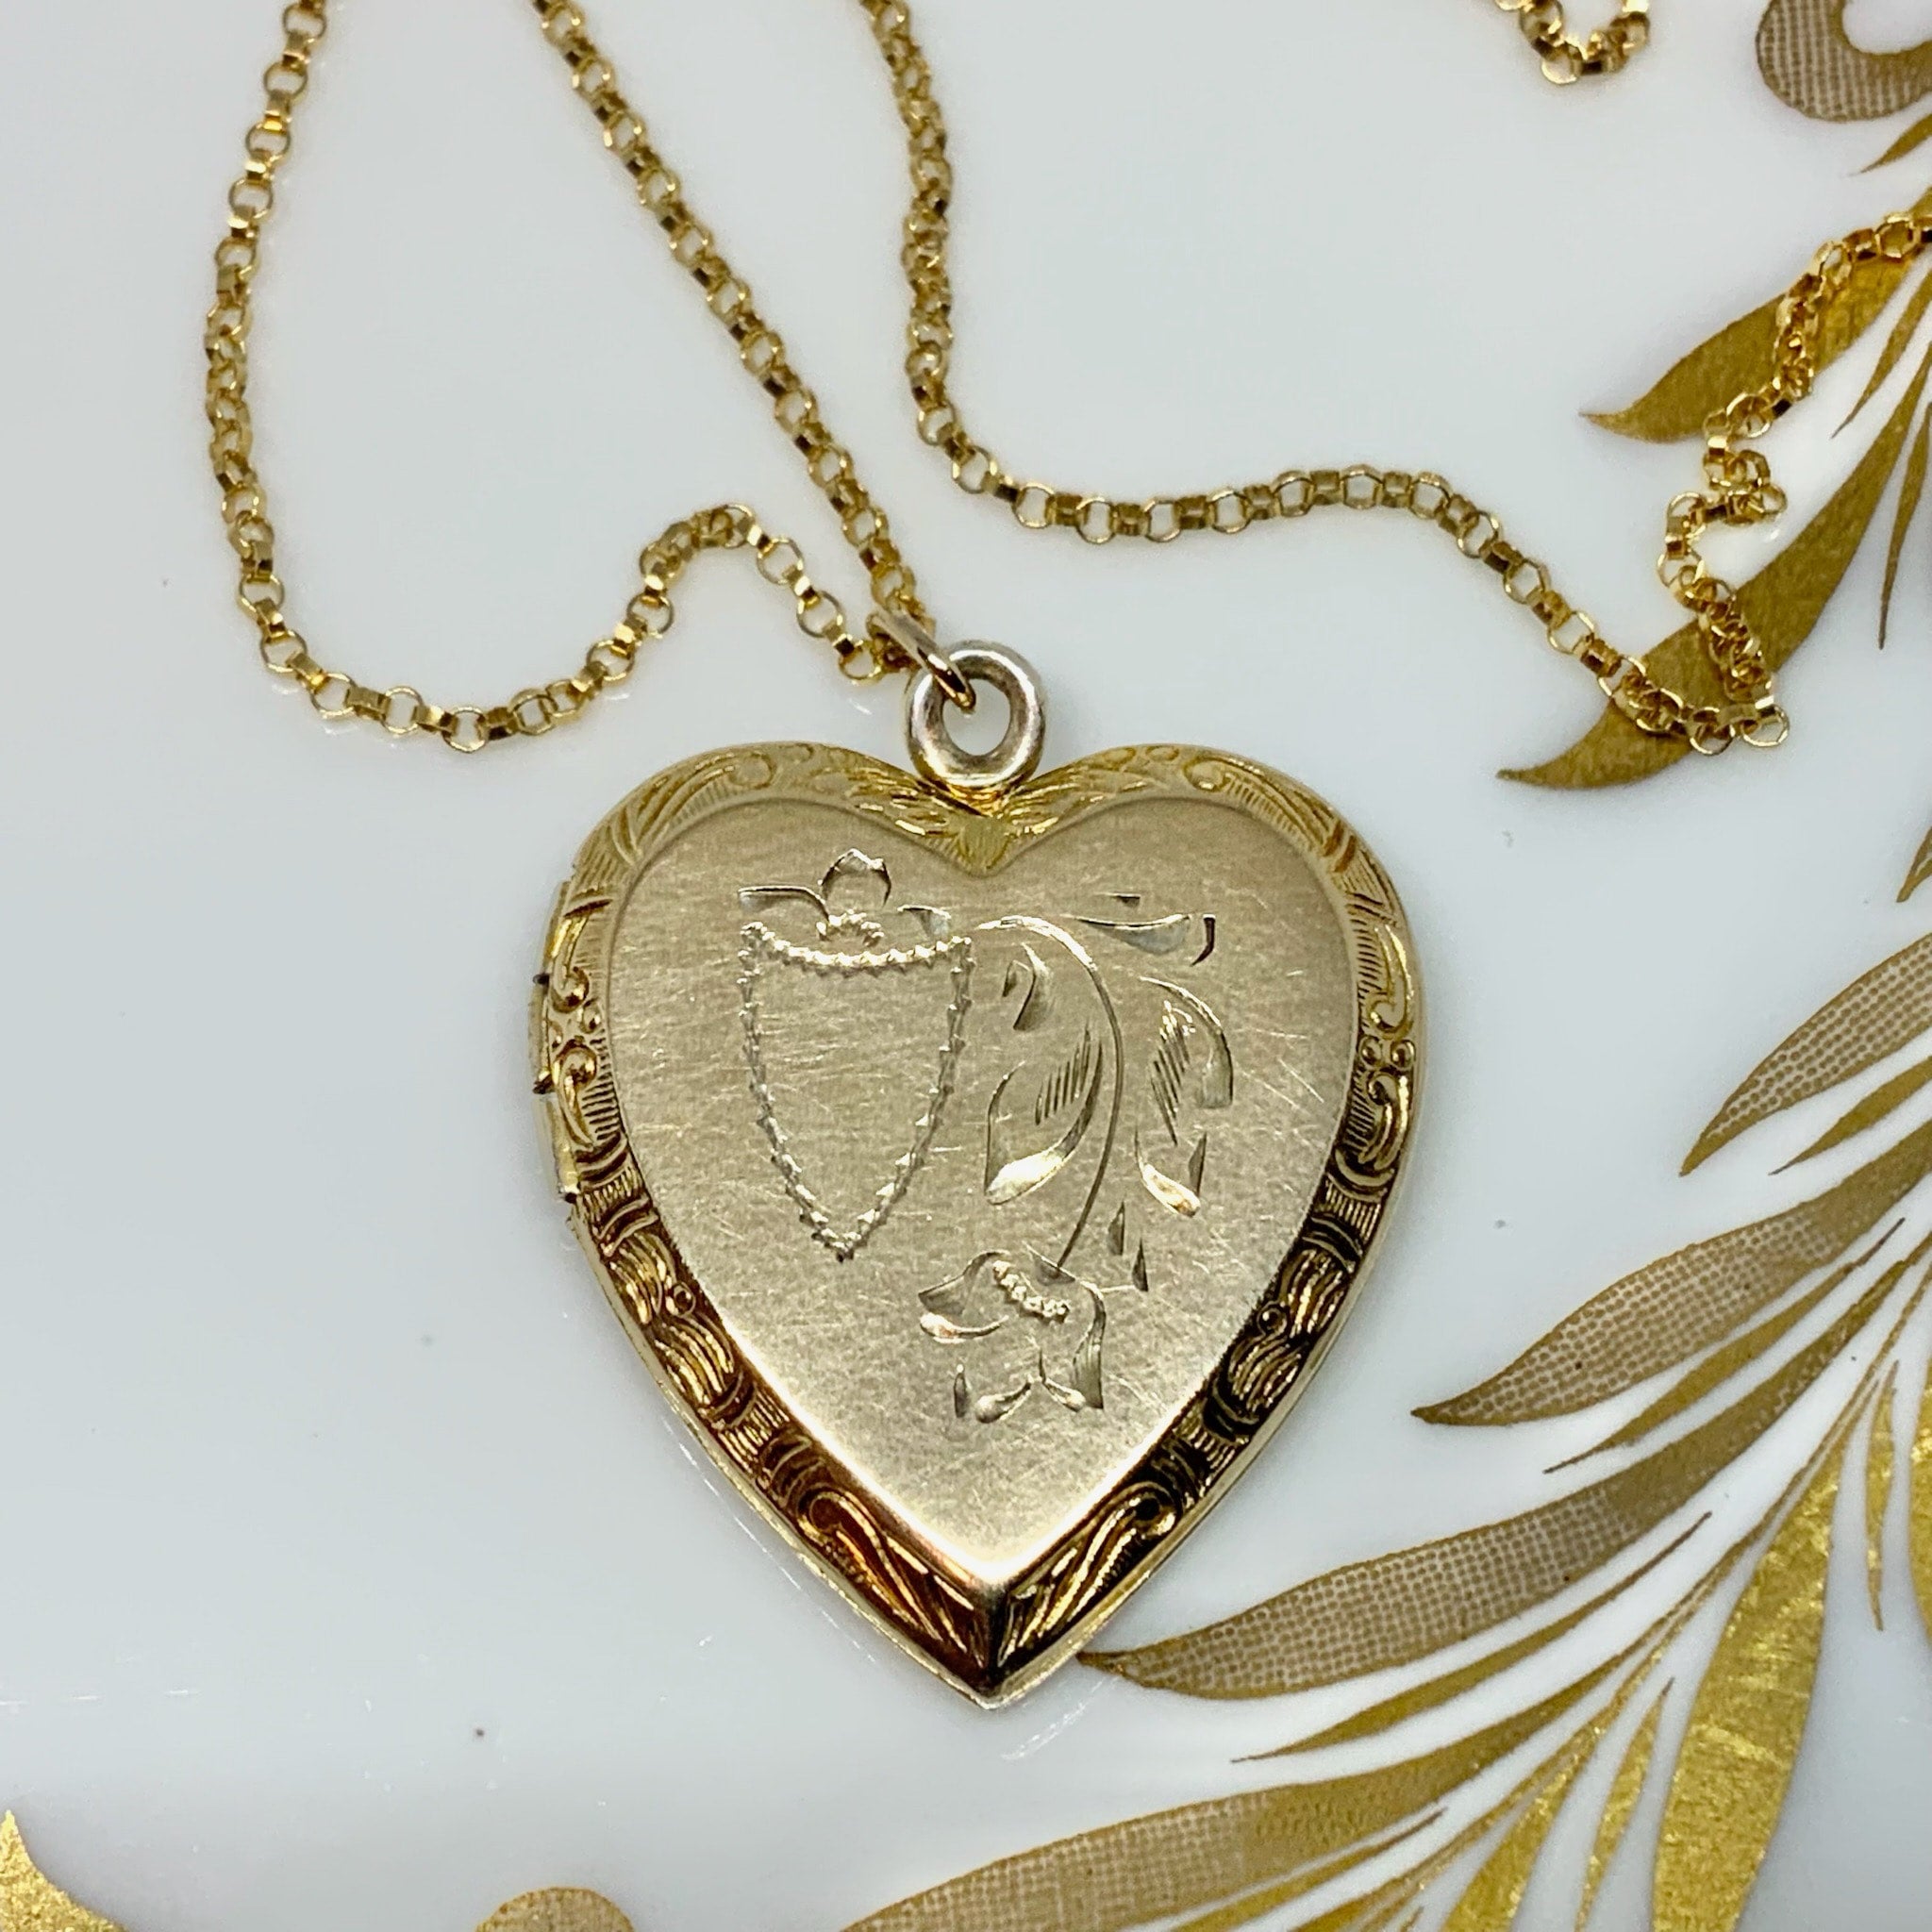 Antique locket pendant and collar necklace – Sperlich Jewelry